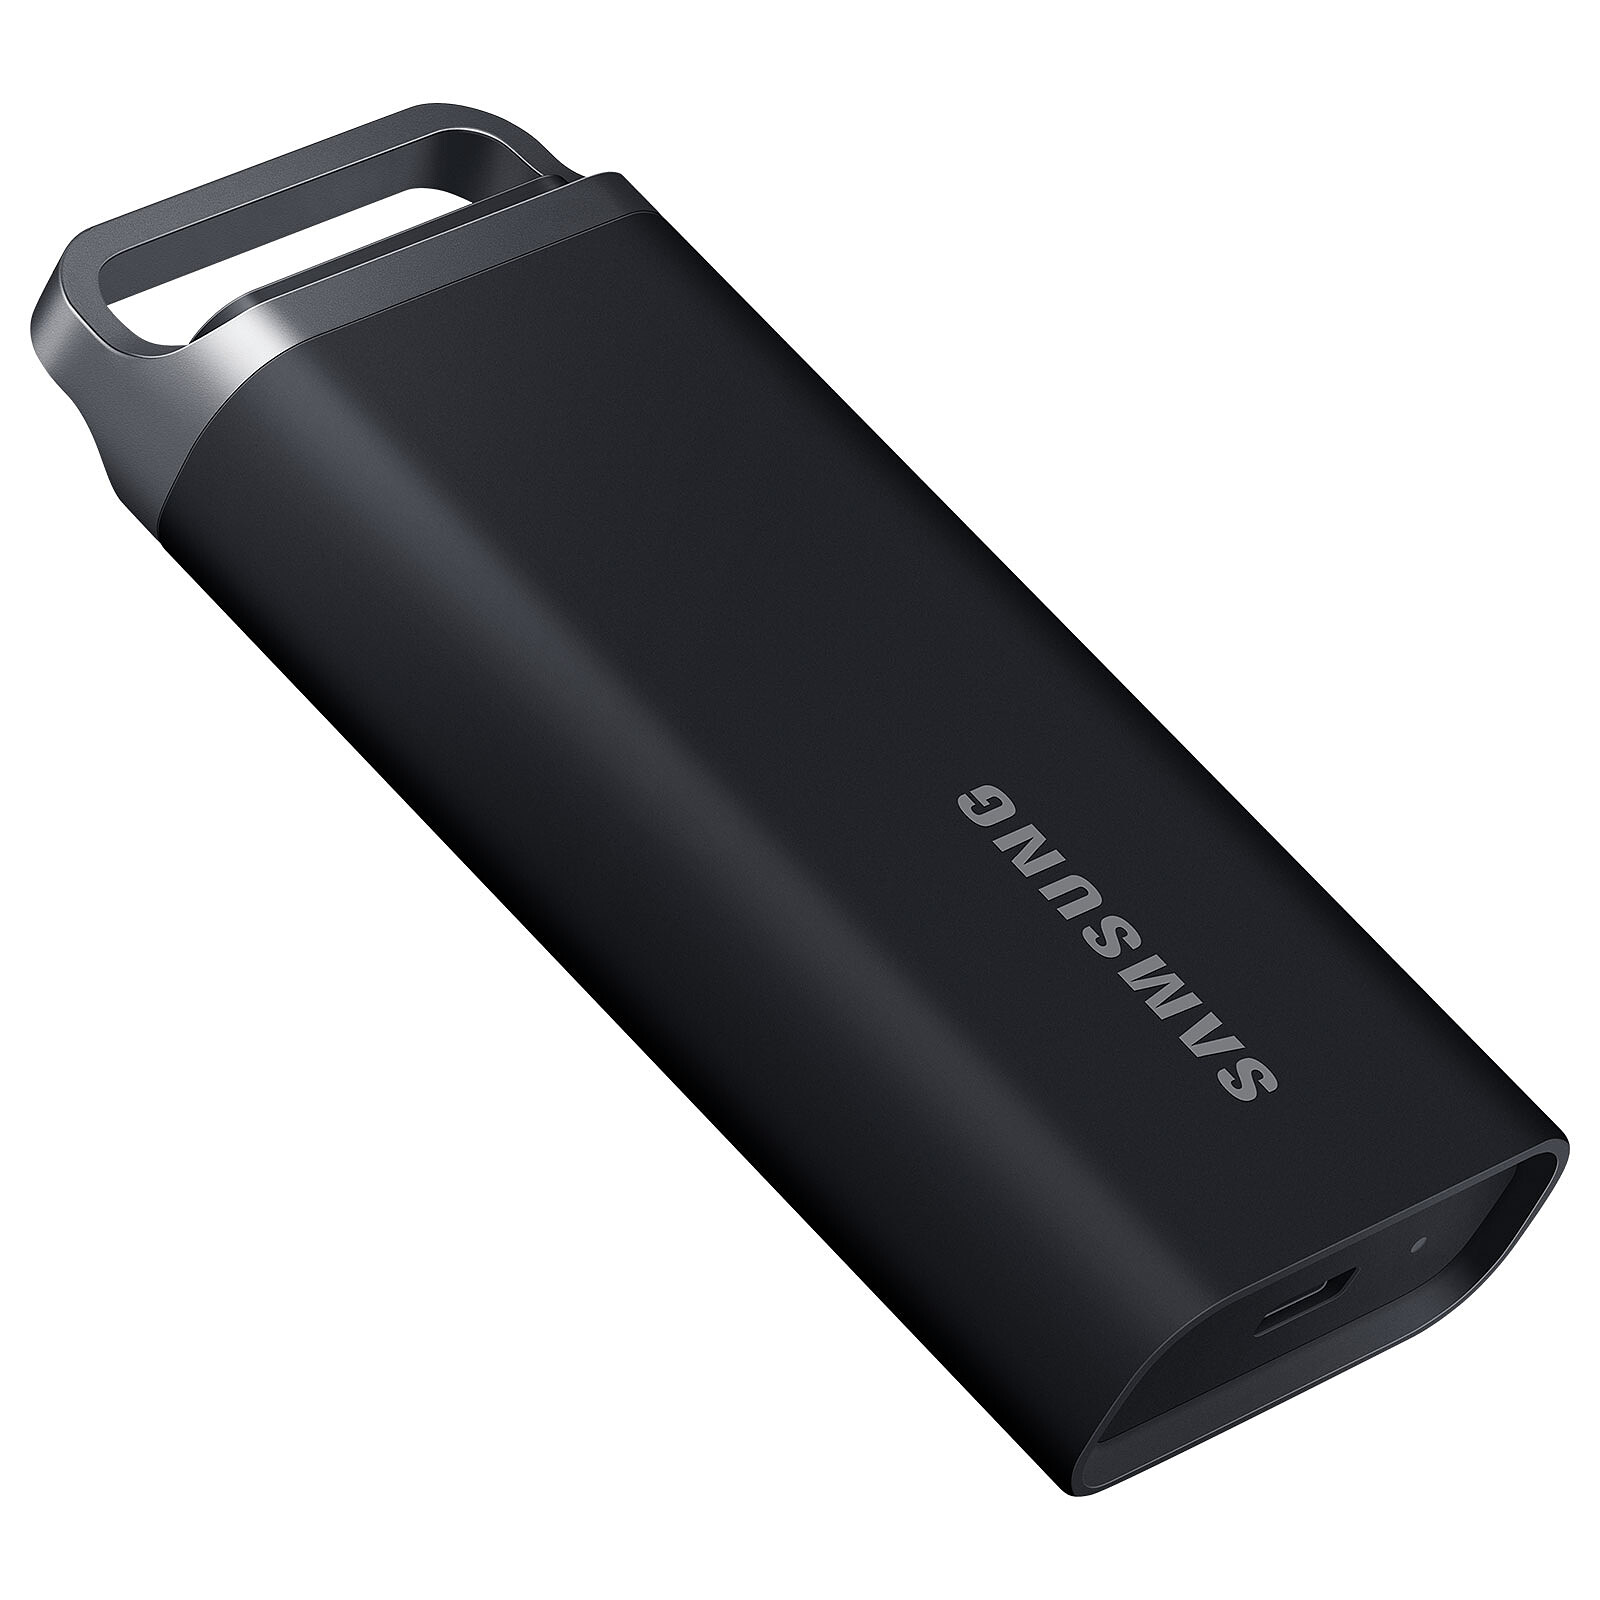 Samsung SSD Portable T5 500 Go - Disque dur externe - Garantie 3 ans LDLC